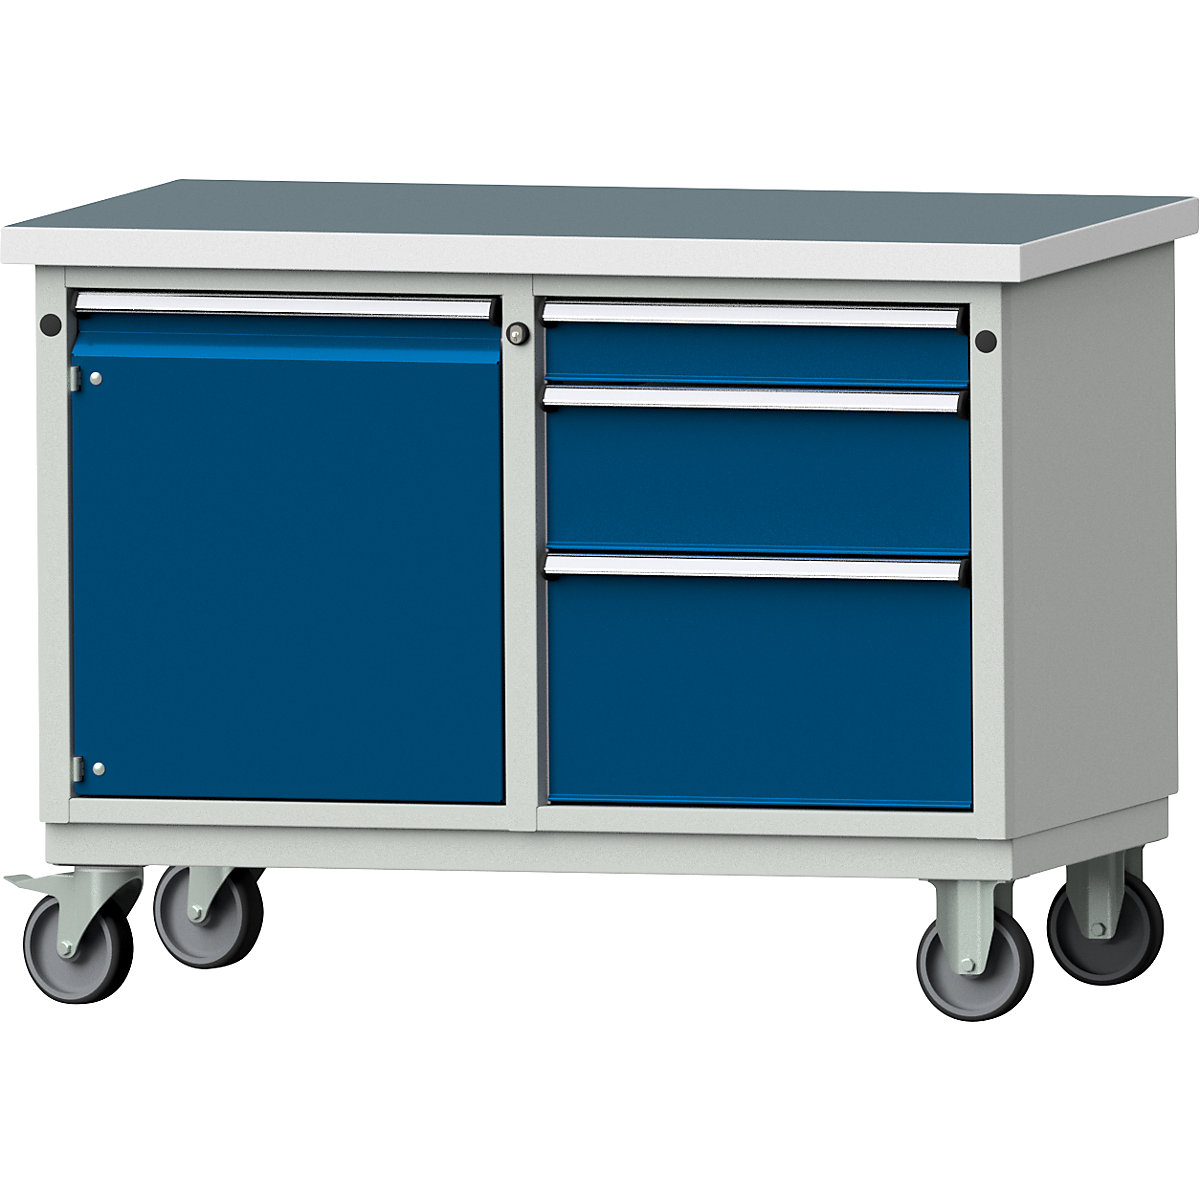 Compact workbench – ANKE, WxD 1140 x 650 mm, 1 cupboard, 3 drawers, mobile, universal worktop-4